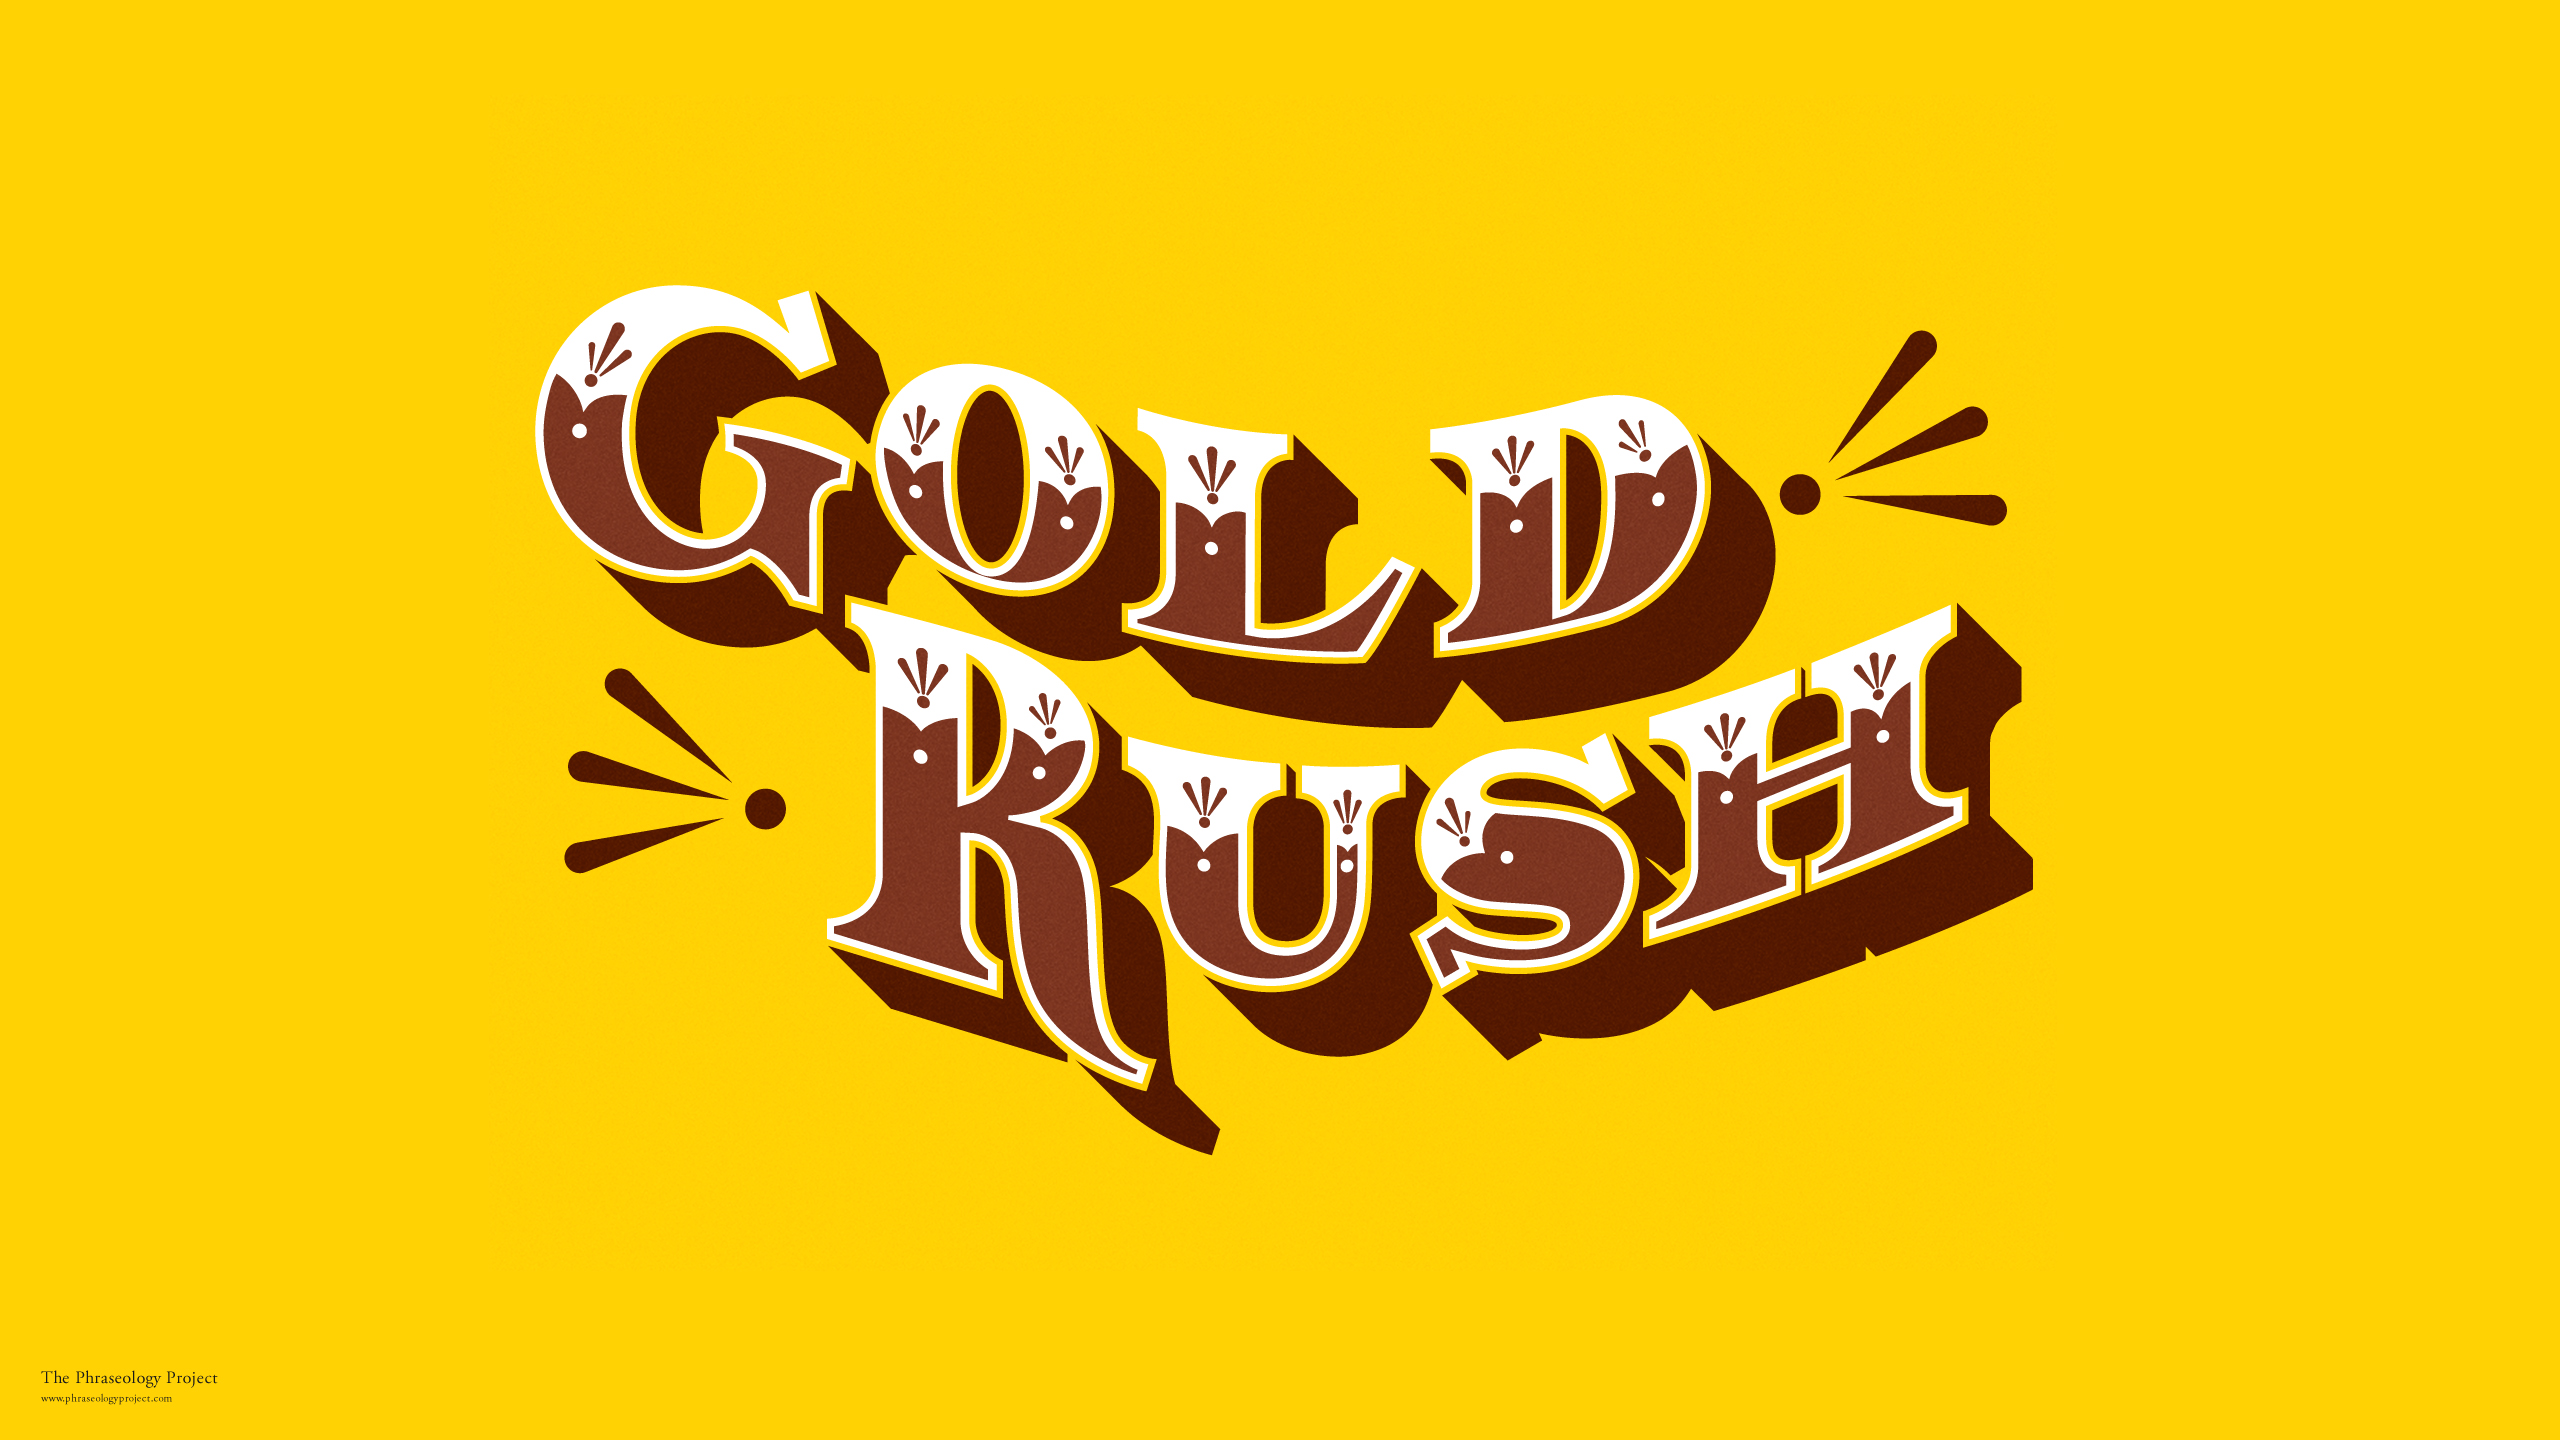 Order-Aheadu201d Gold Rush . - Gold Rush Clipart